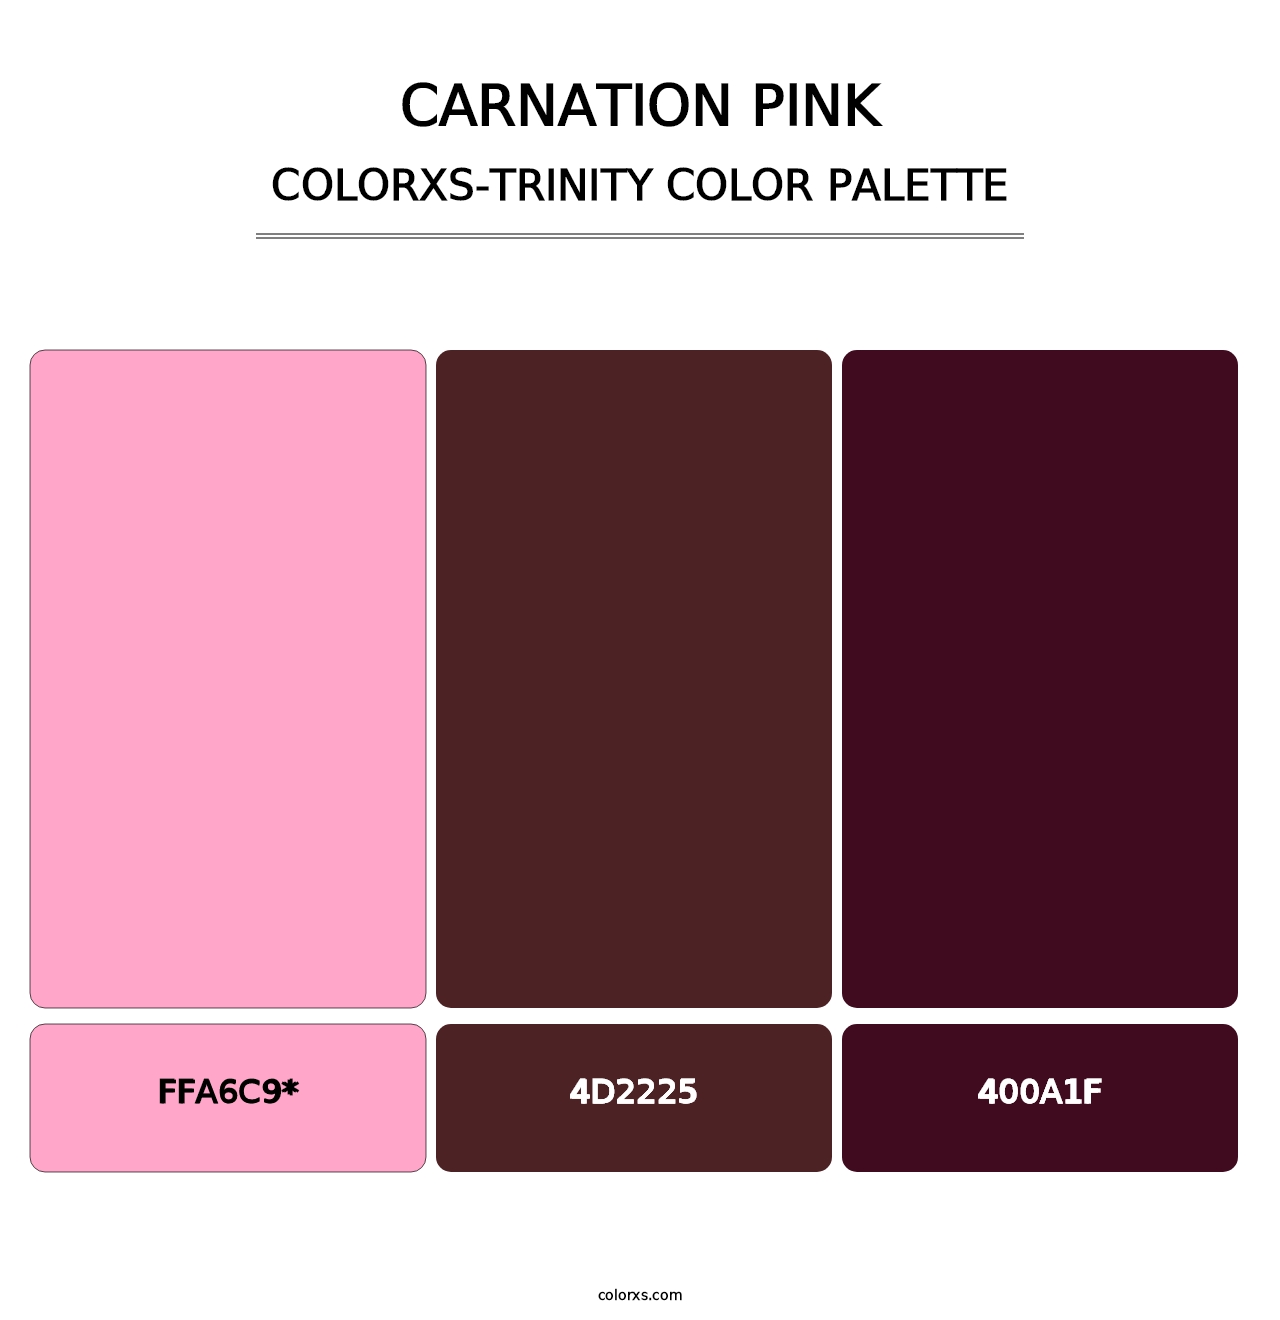 Carnation Pink - Colorxs Trinity Palette